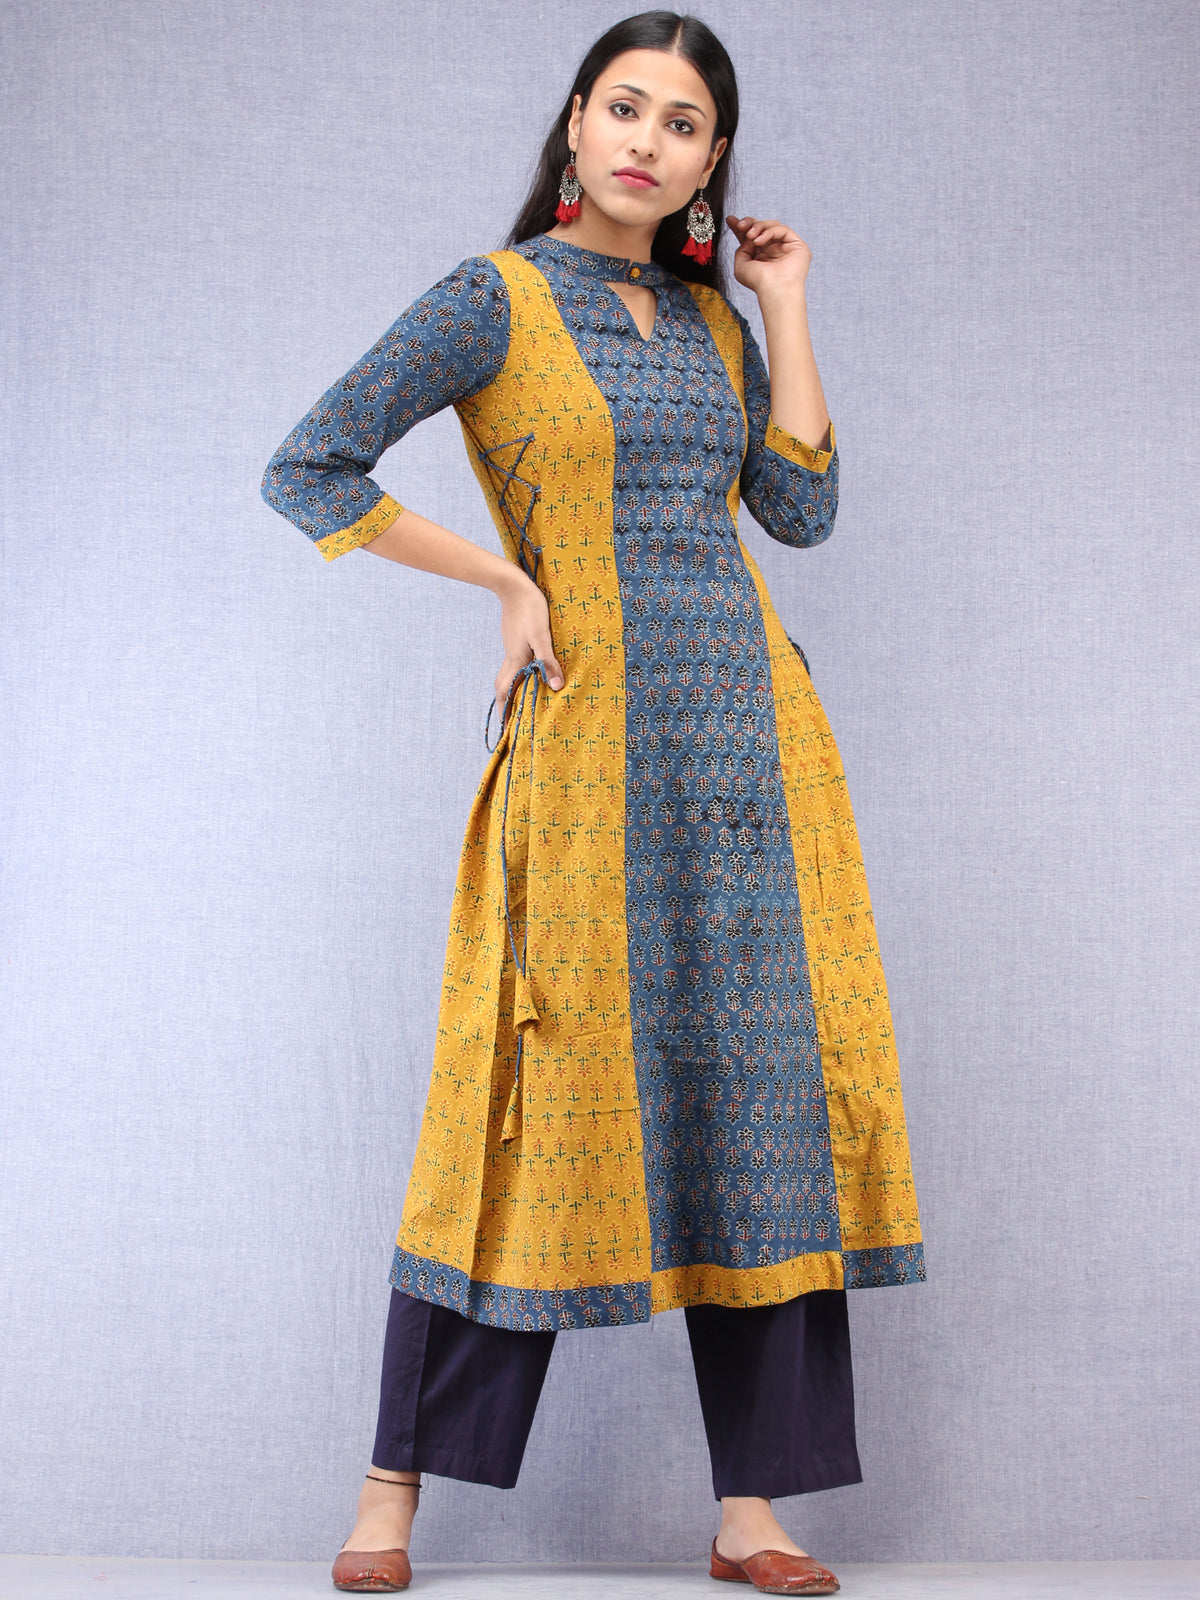 Stylish Kurti from Two Colour Fabrics/Two Colour Combination Kurti  Design/Cotton kurti design - YouTube